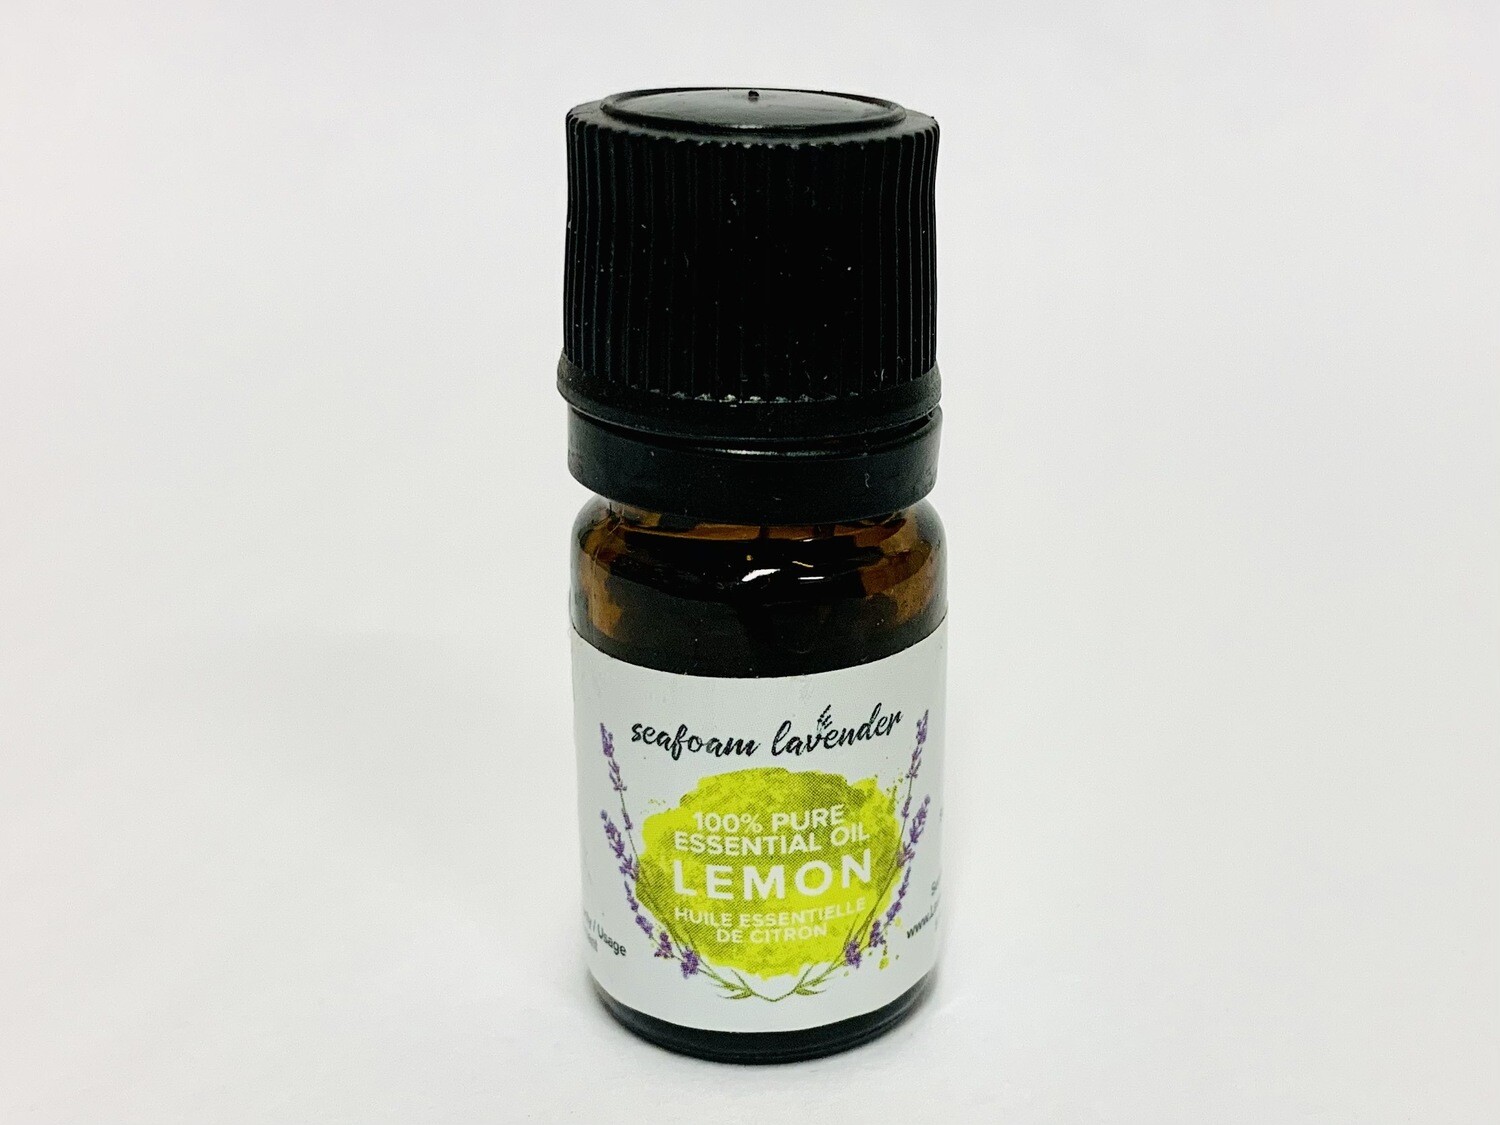 Lemon Essential Oil- Seafoam Lavender